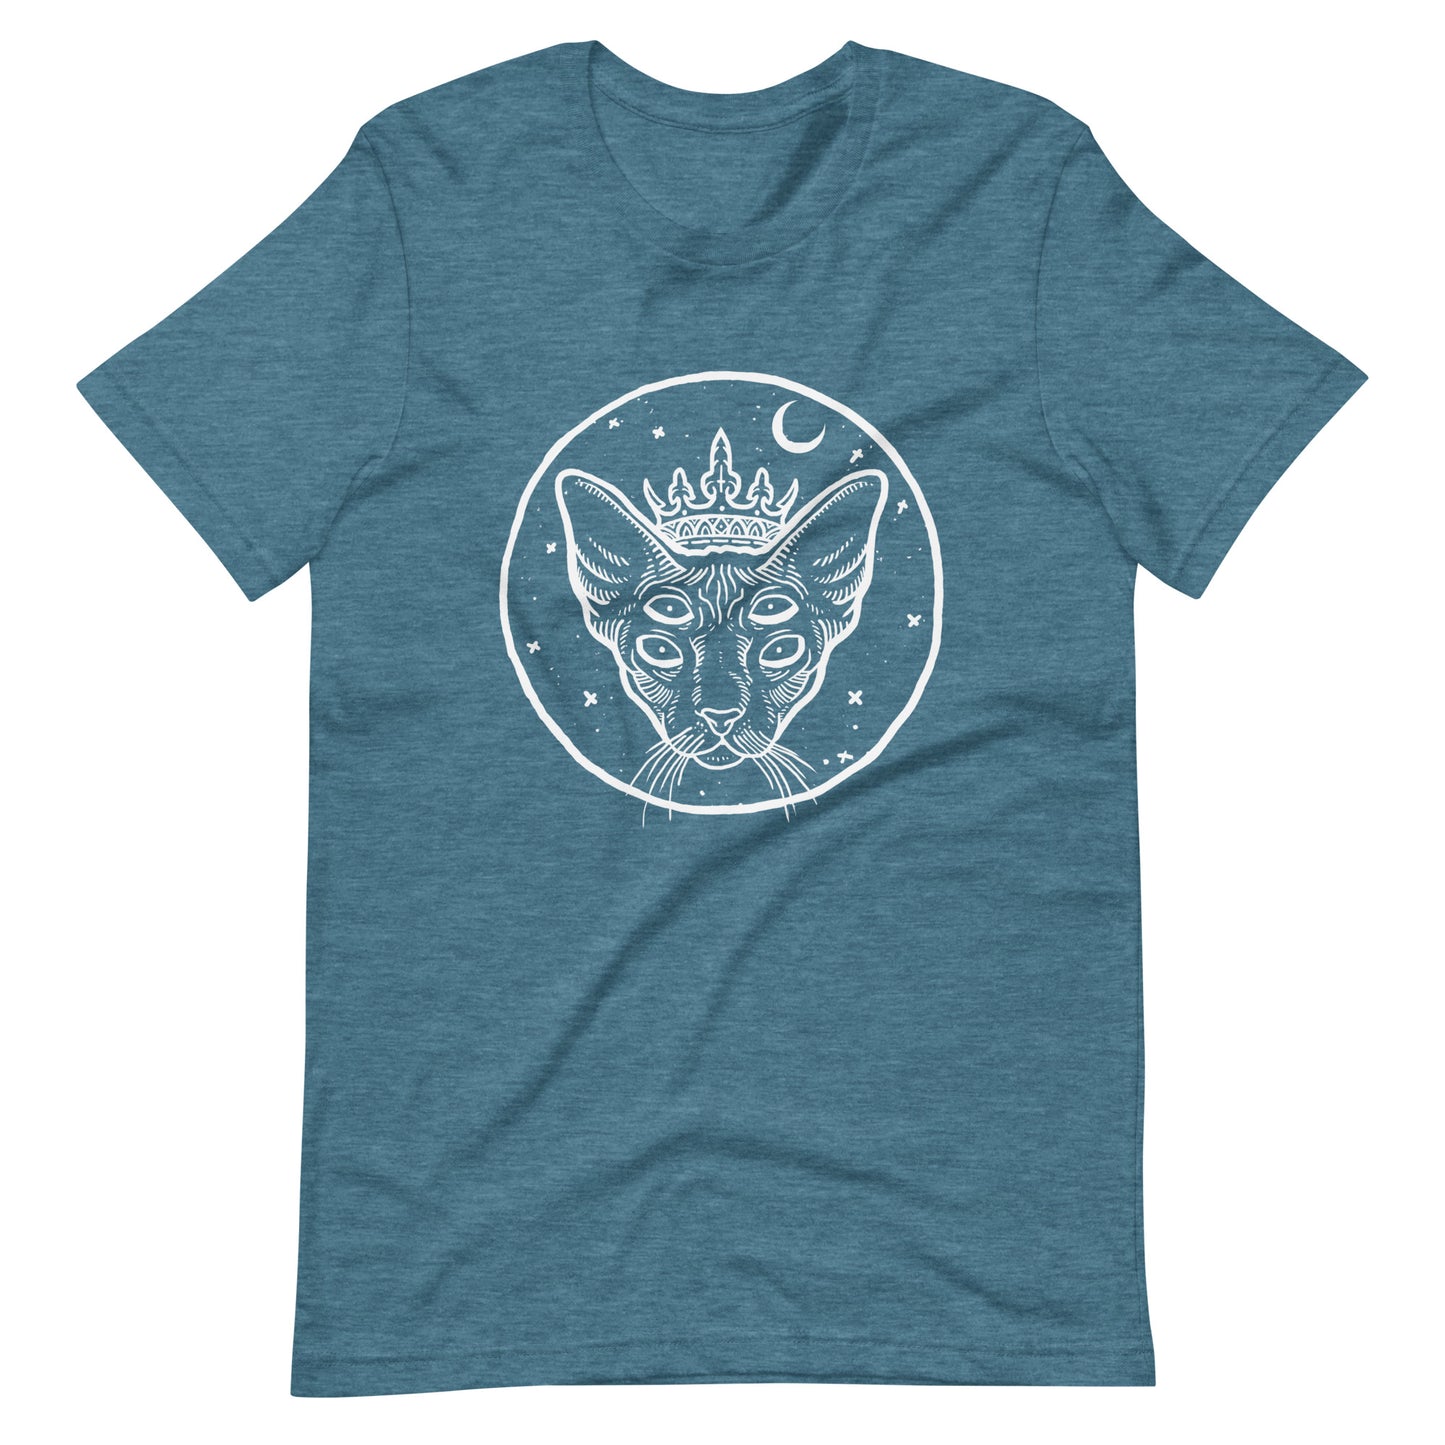 The Ruler - Men's t-shirt - Heather Deep Teal Front